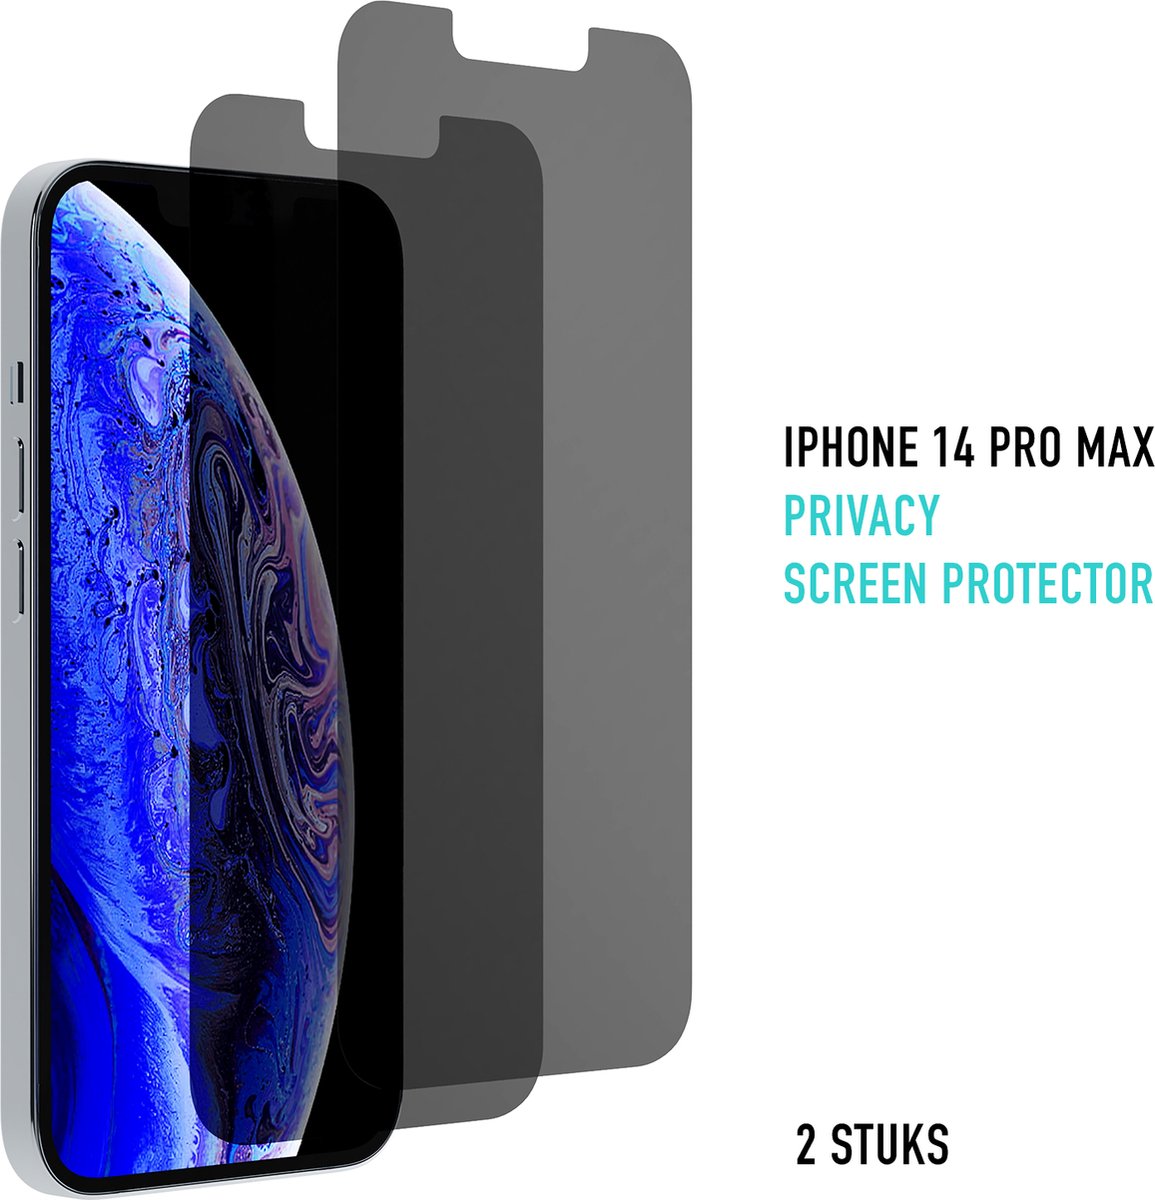 Spy-fy Privacy Screenprotector iPhone 14 Pro Max met Privacy Filter | Two-pack privacy screens | Met installatiekit | Privacy Screen voor iPhone | Brievenbus geleverd